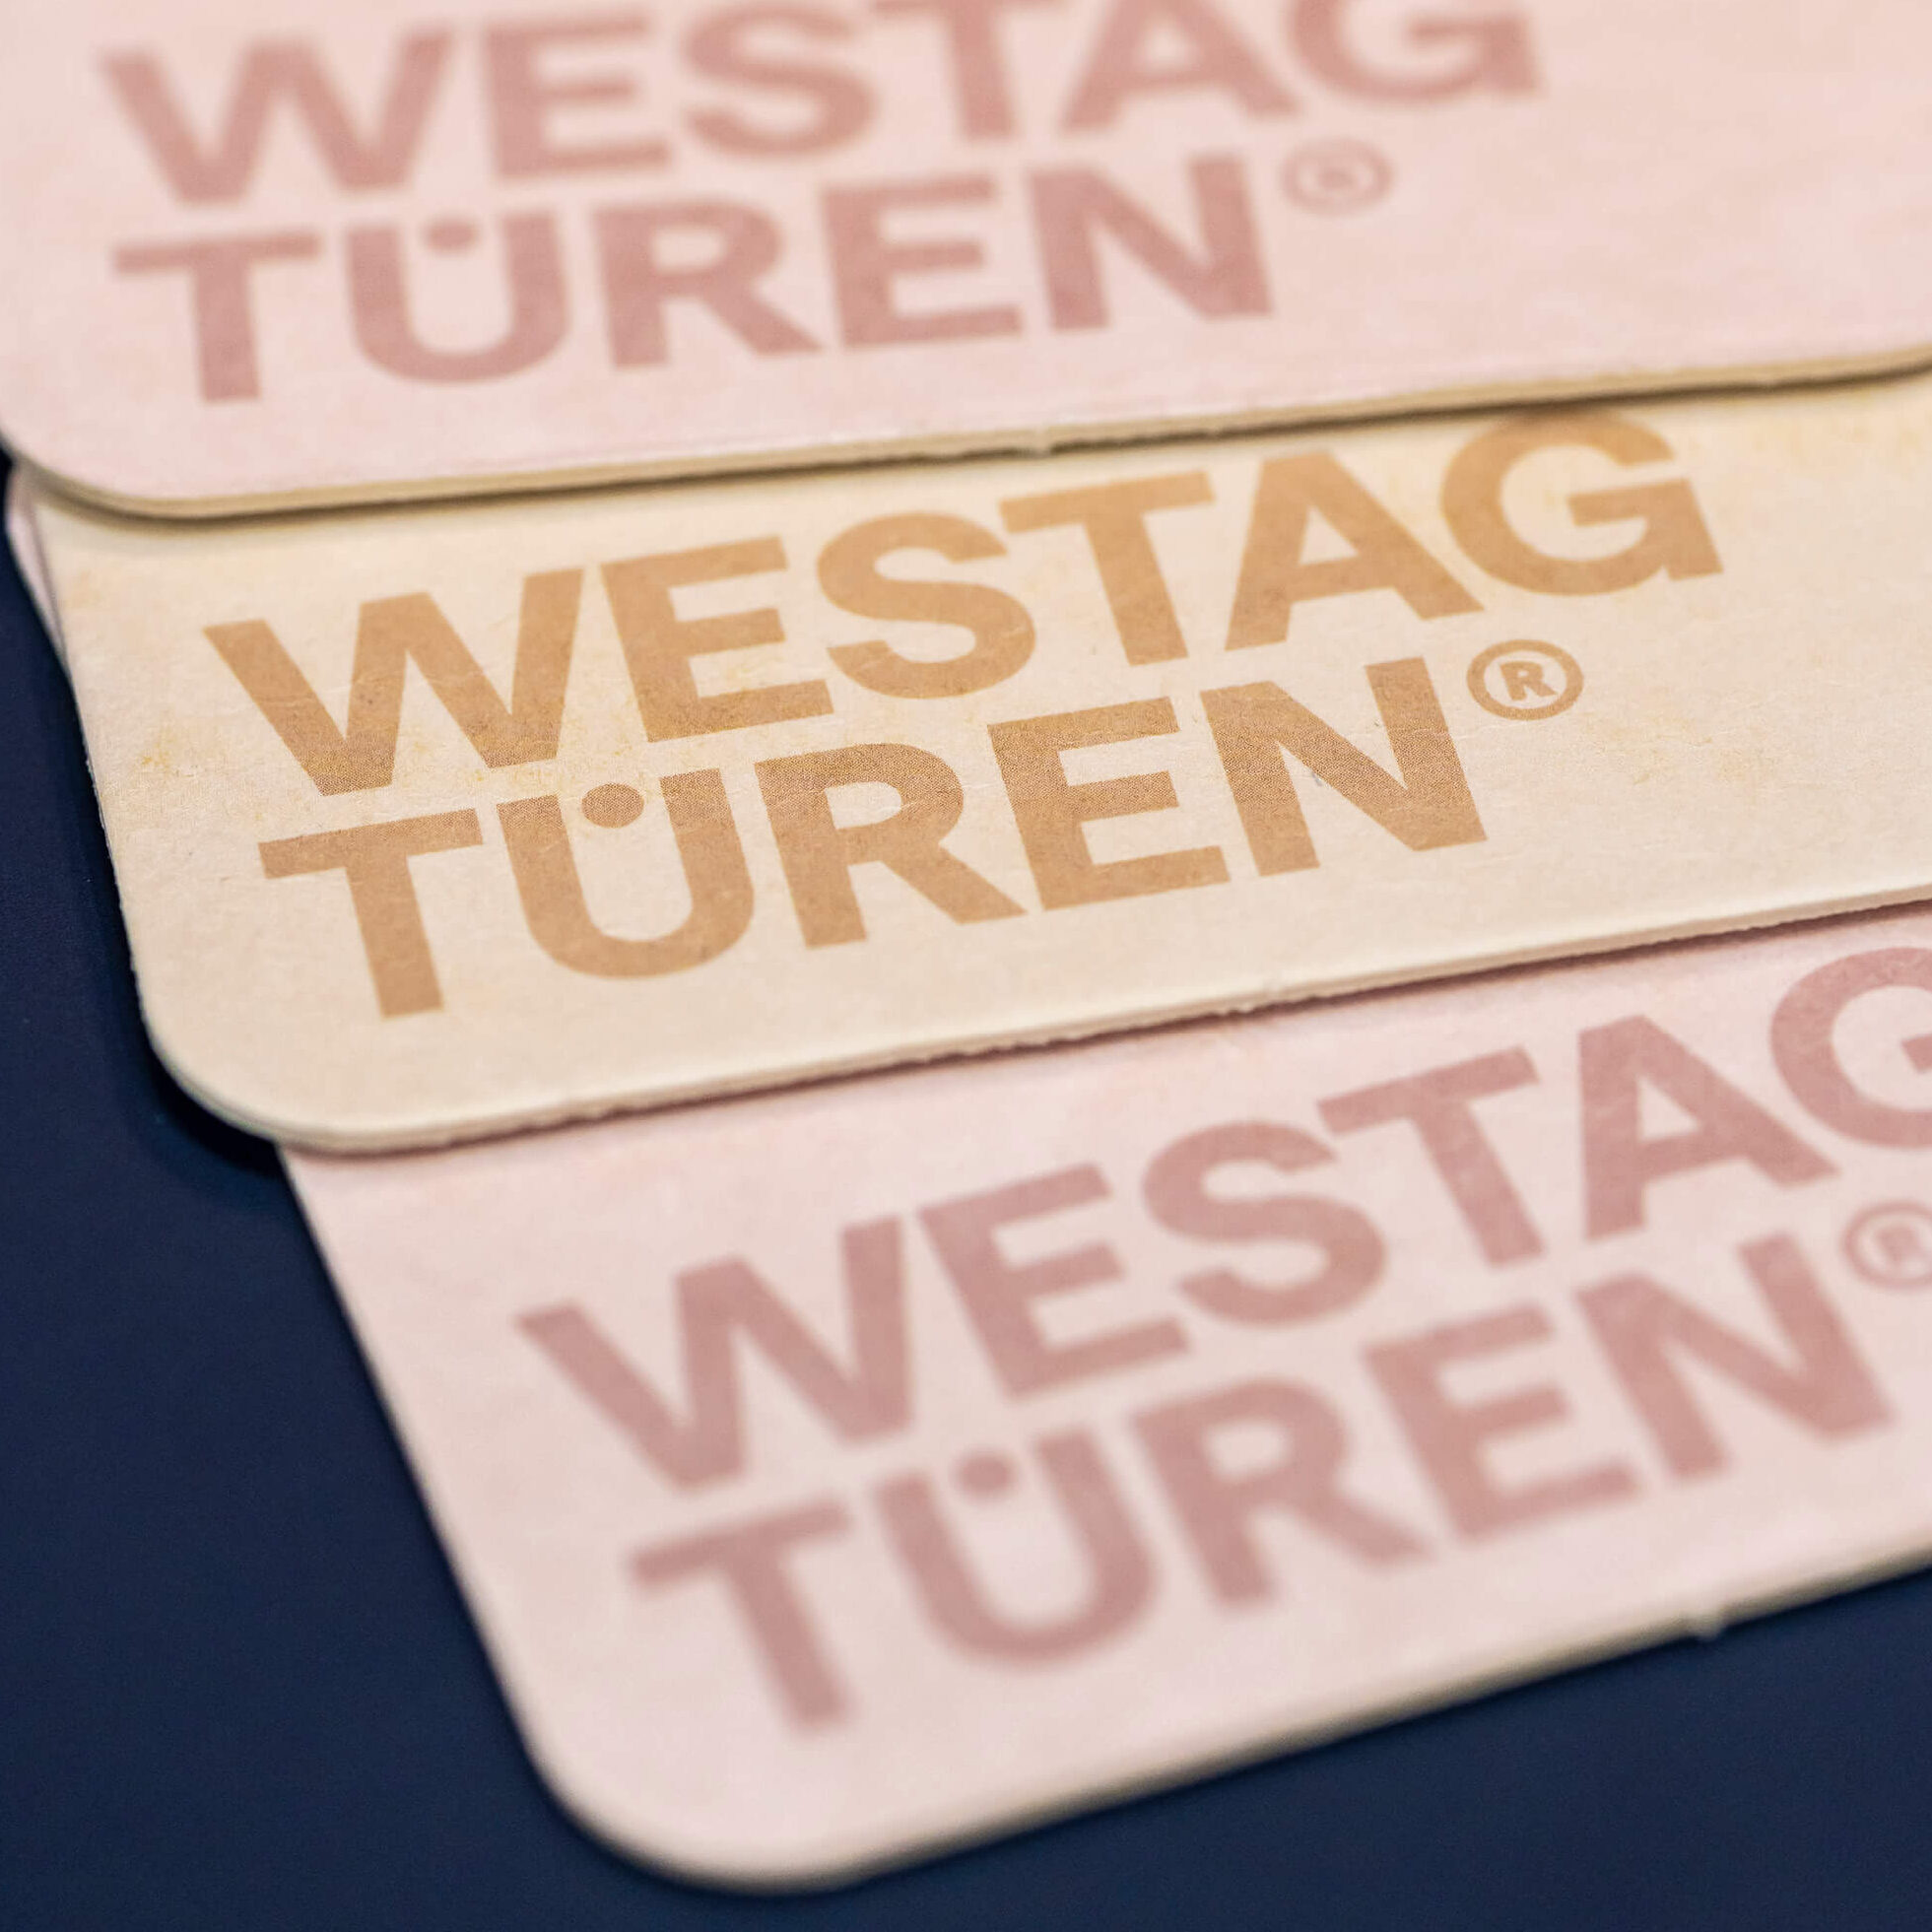 Westag Türen logo close up 